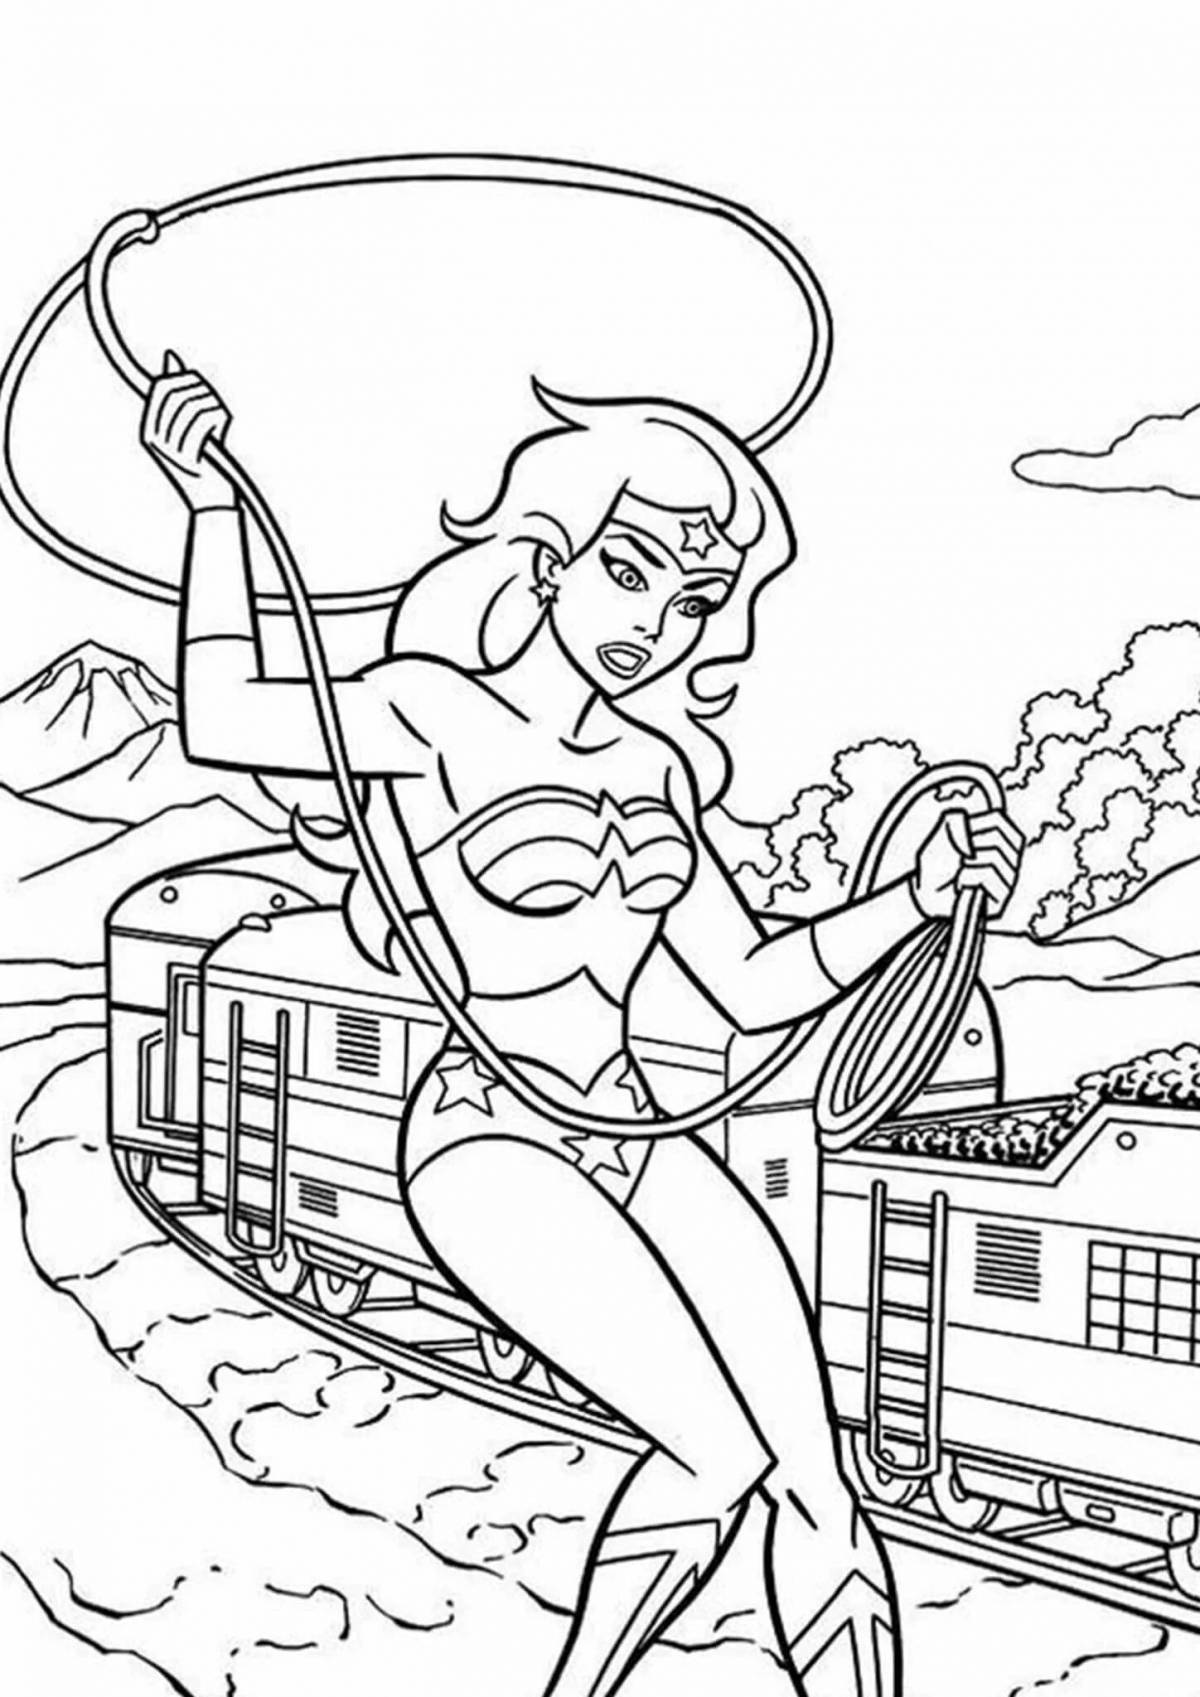 Coloring page shining superwoman